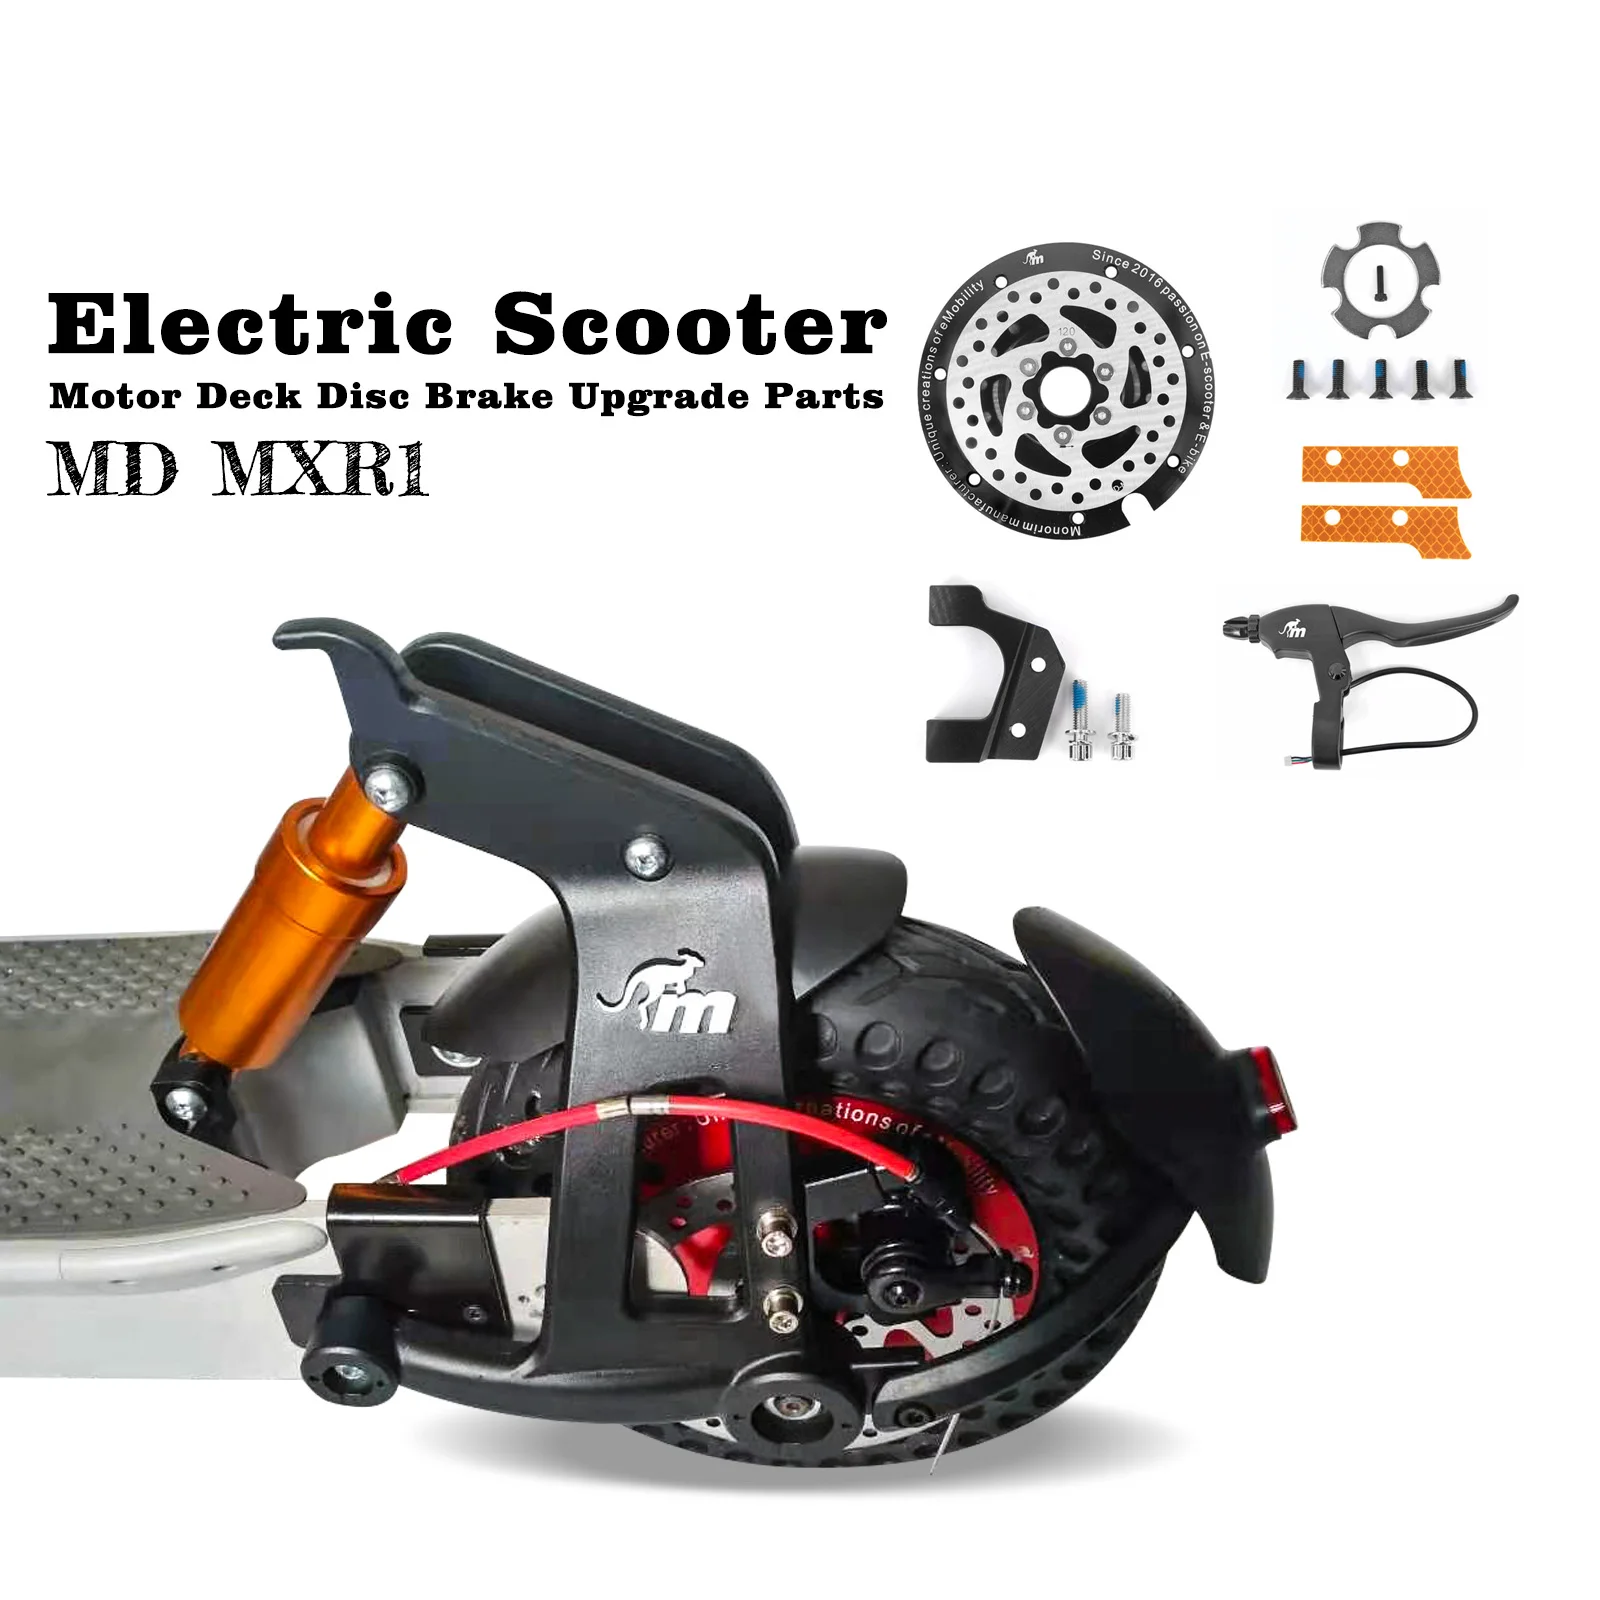 

MONORIM MD-MXR1 Scooter Disc Brake Upgrade Parts for Segway Max G30 D E P DII LEII LD LE LP, 120/140mm for Rear Motor with MXR1